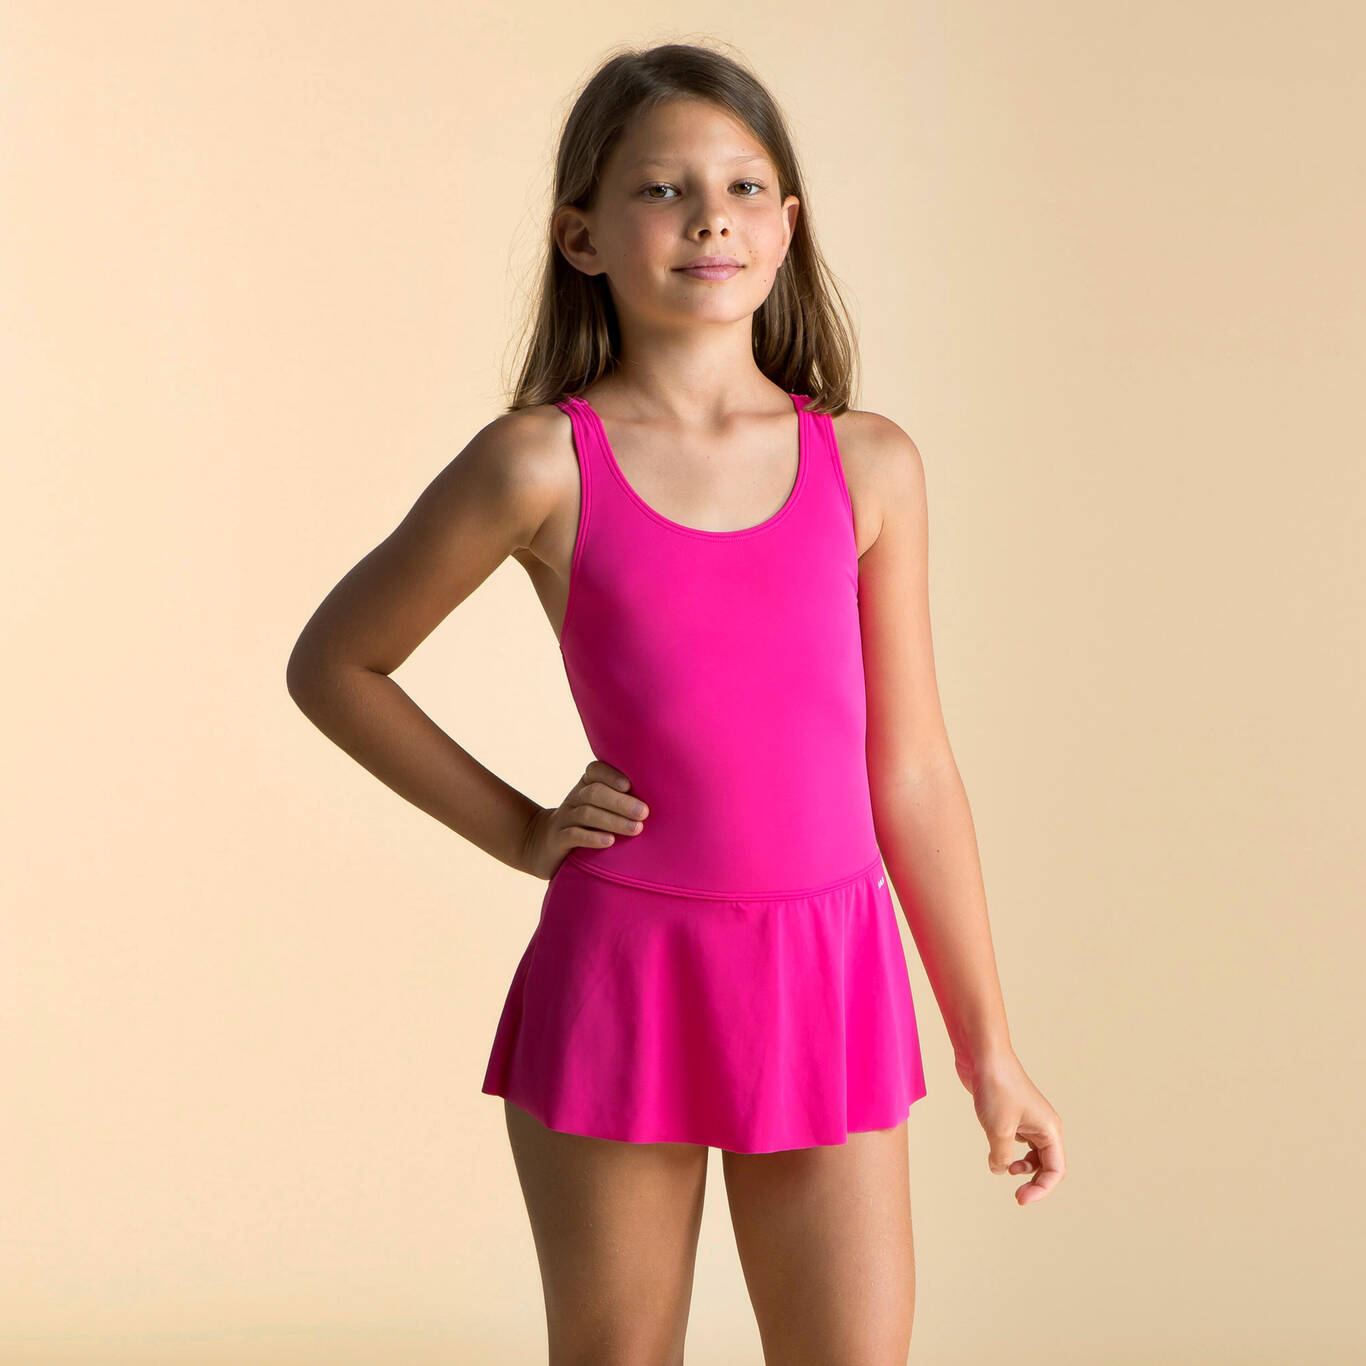 Girls' 1-piece skirt swimsuit Vega Omi Pink